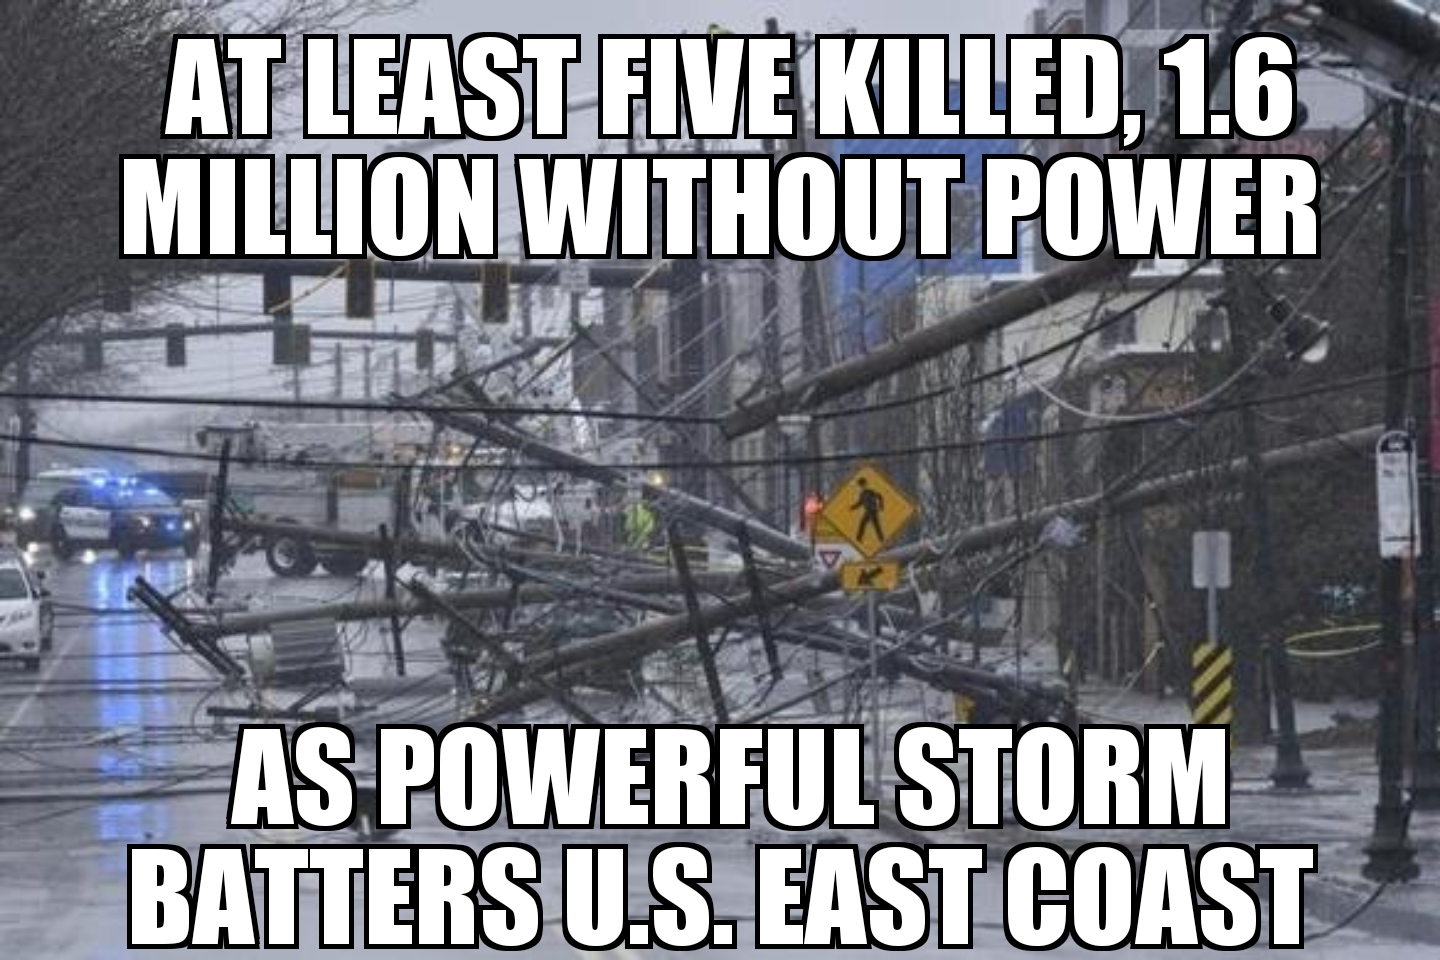 Powerful storm batters U.S. east coast